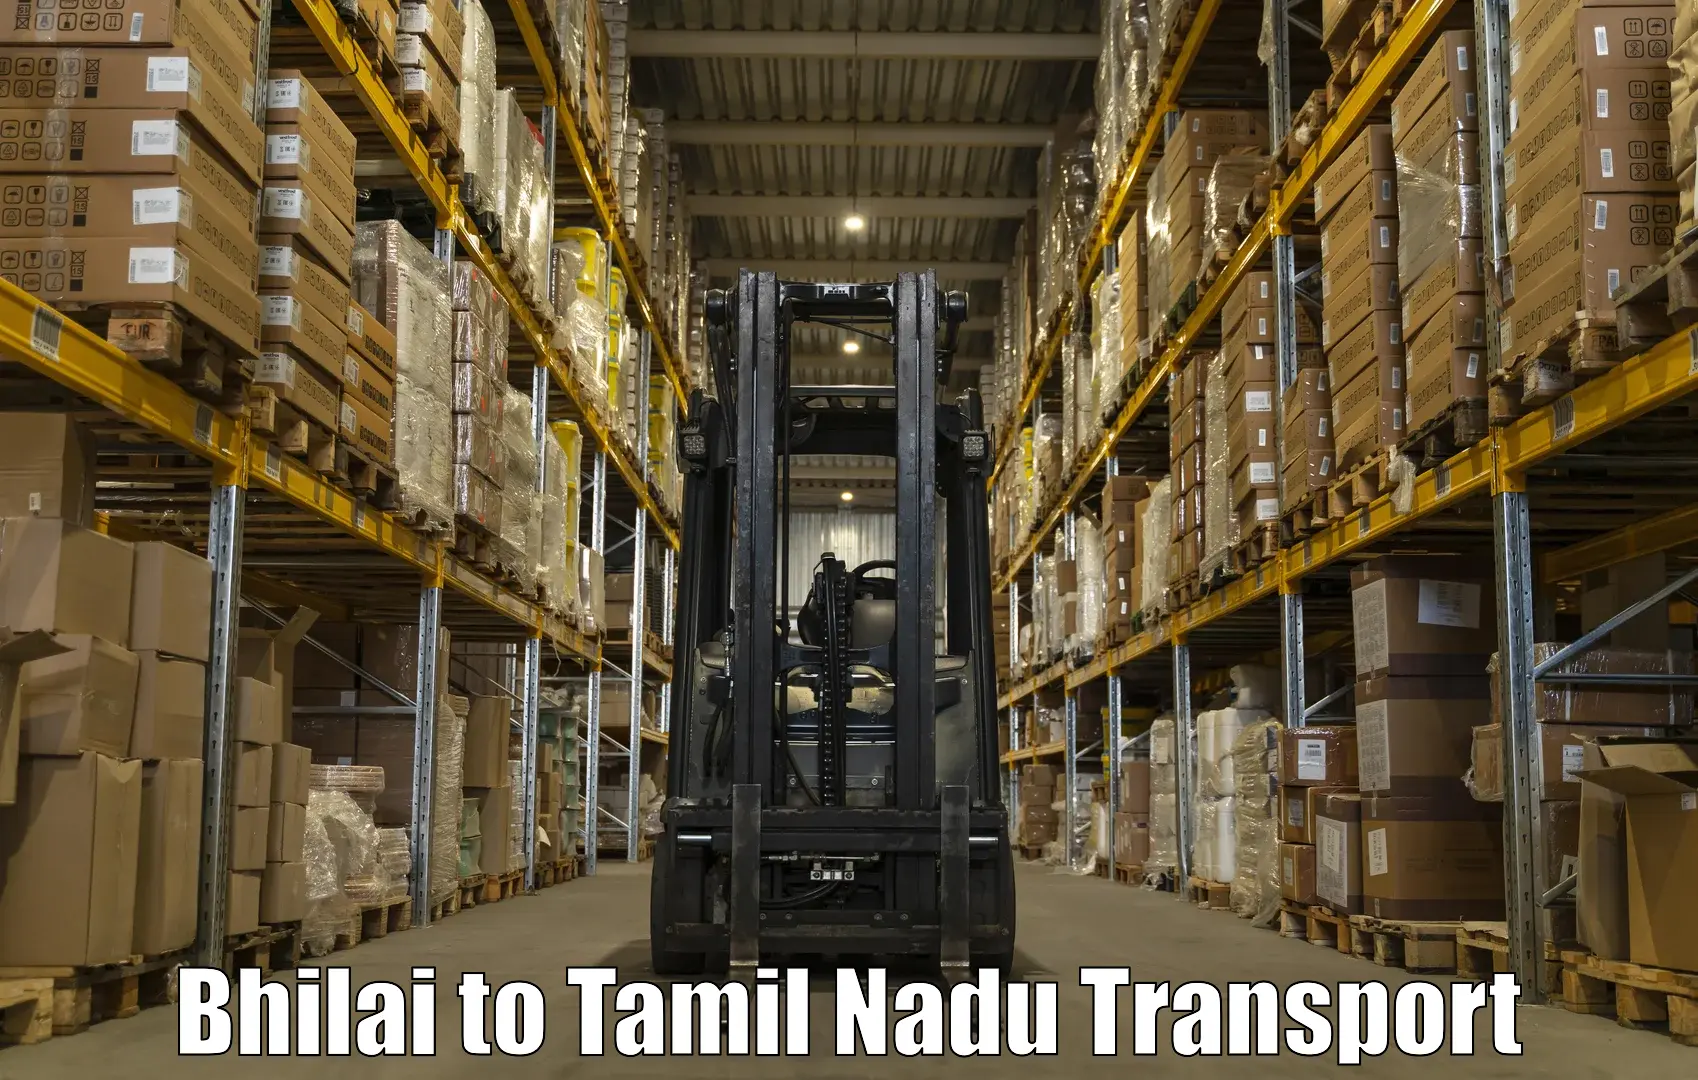 Delivery service Bhilai to Tamil Nadu